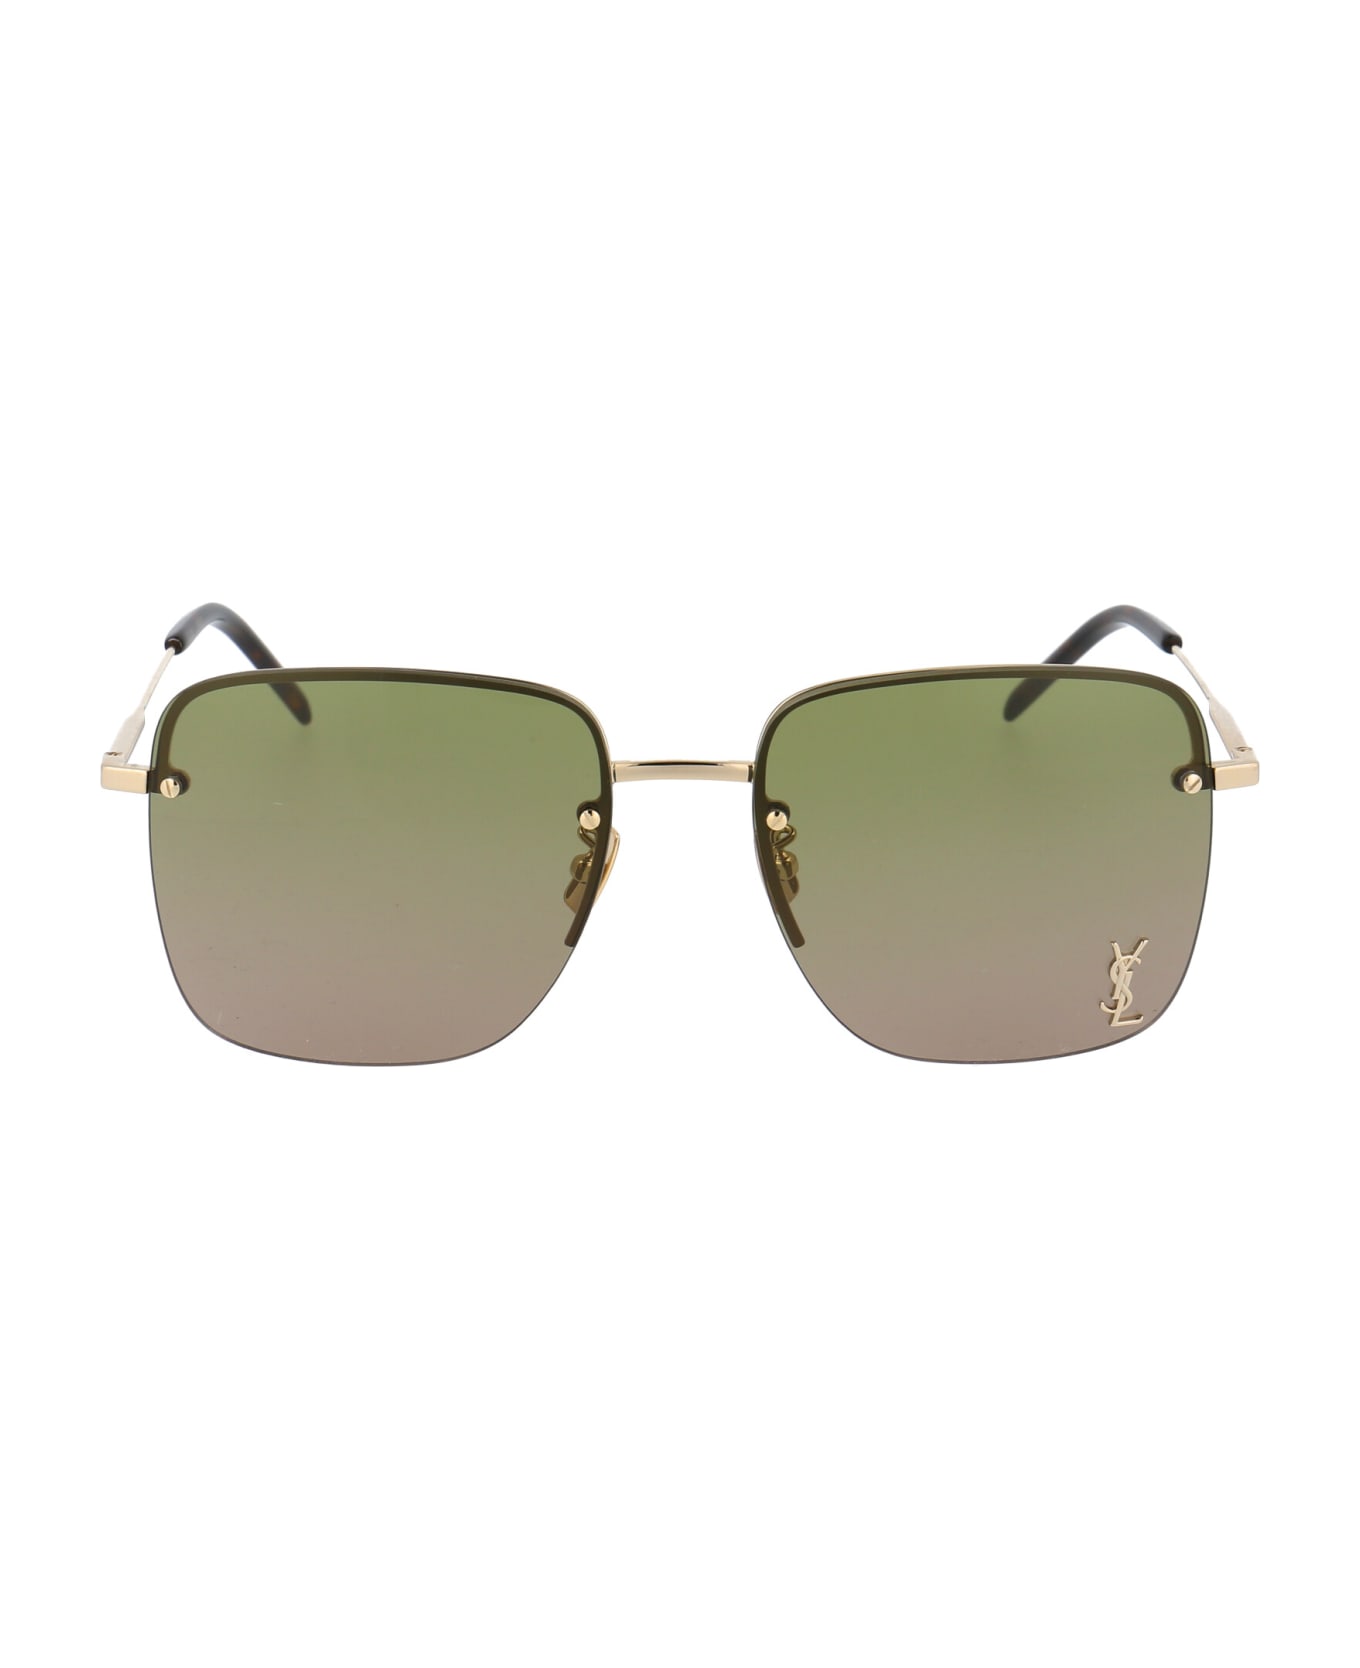 Saint Laurent Eyewear Sl 312 M Sunglasses - 003 GOLD GOLD GREEN